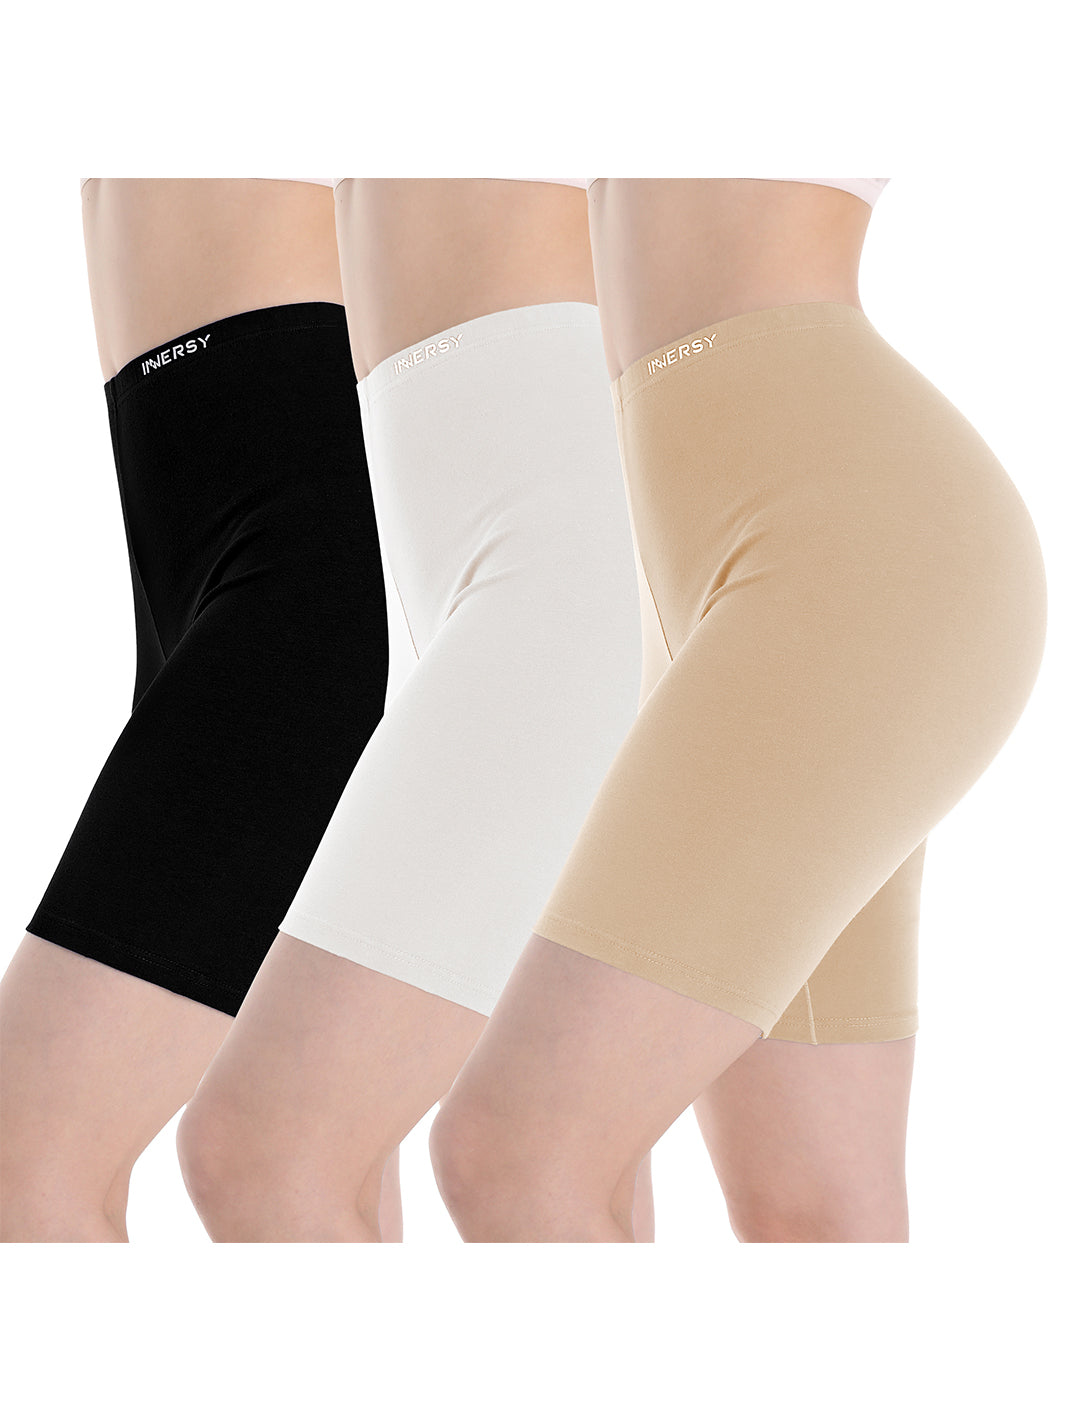 Cotton Damenunterhosen Short Brief Set Back For Women Sexy, Stretchy, And  Comfortable Lingerie From Zhusa, $13.19